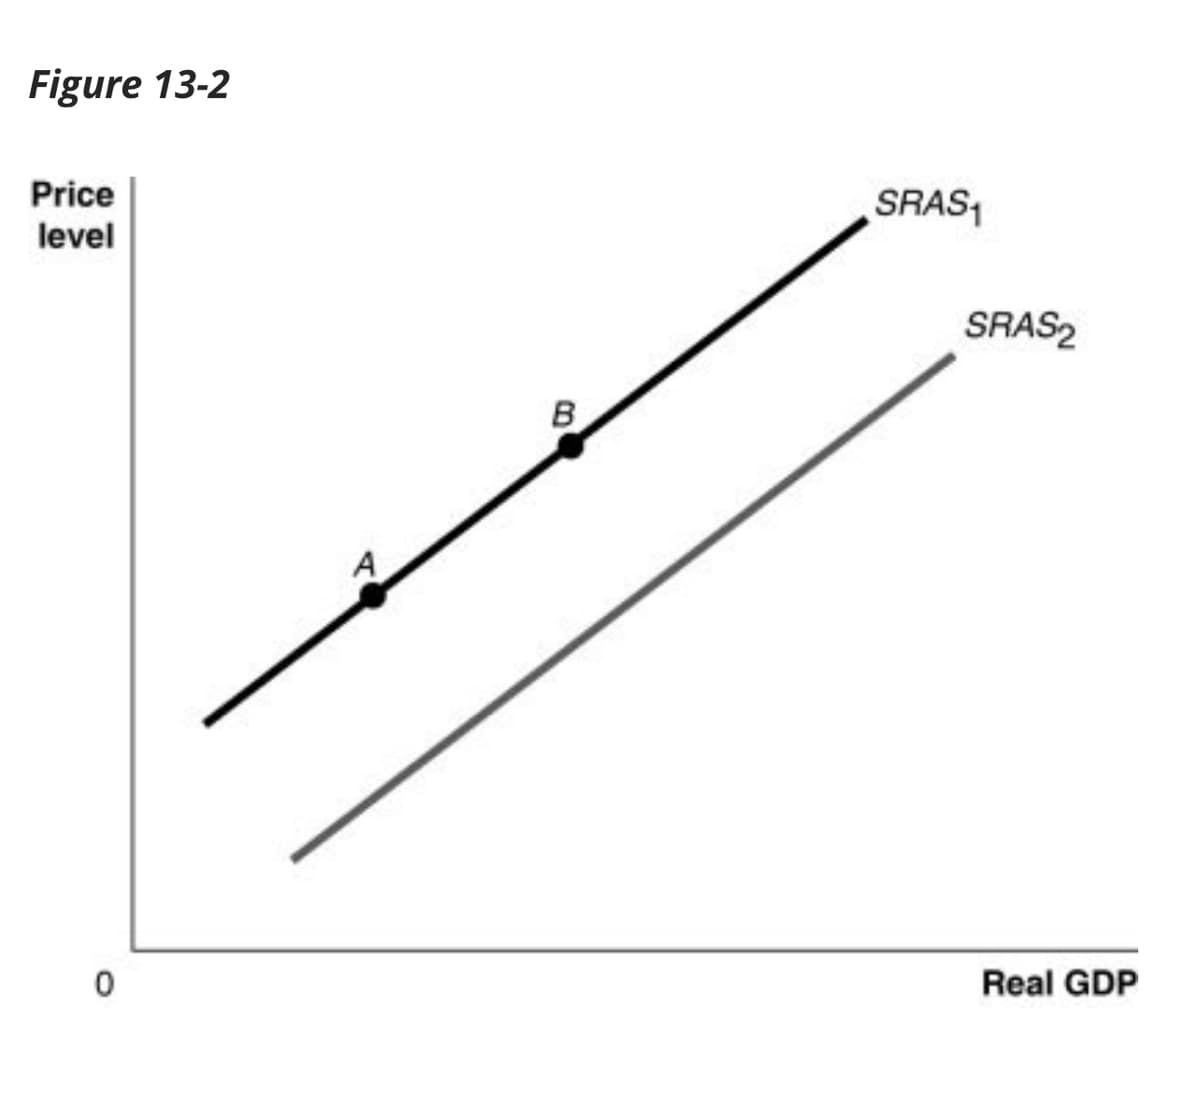 Figure 13-2
Price
level
0
A
B
SRAS₁
SRAS2
Real GDP